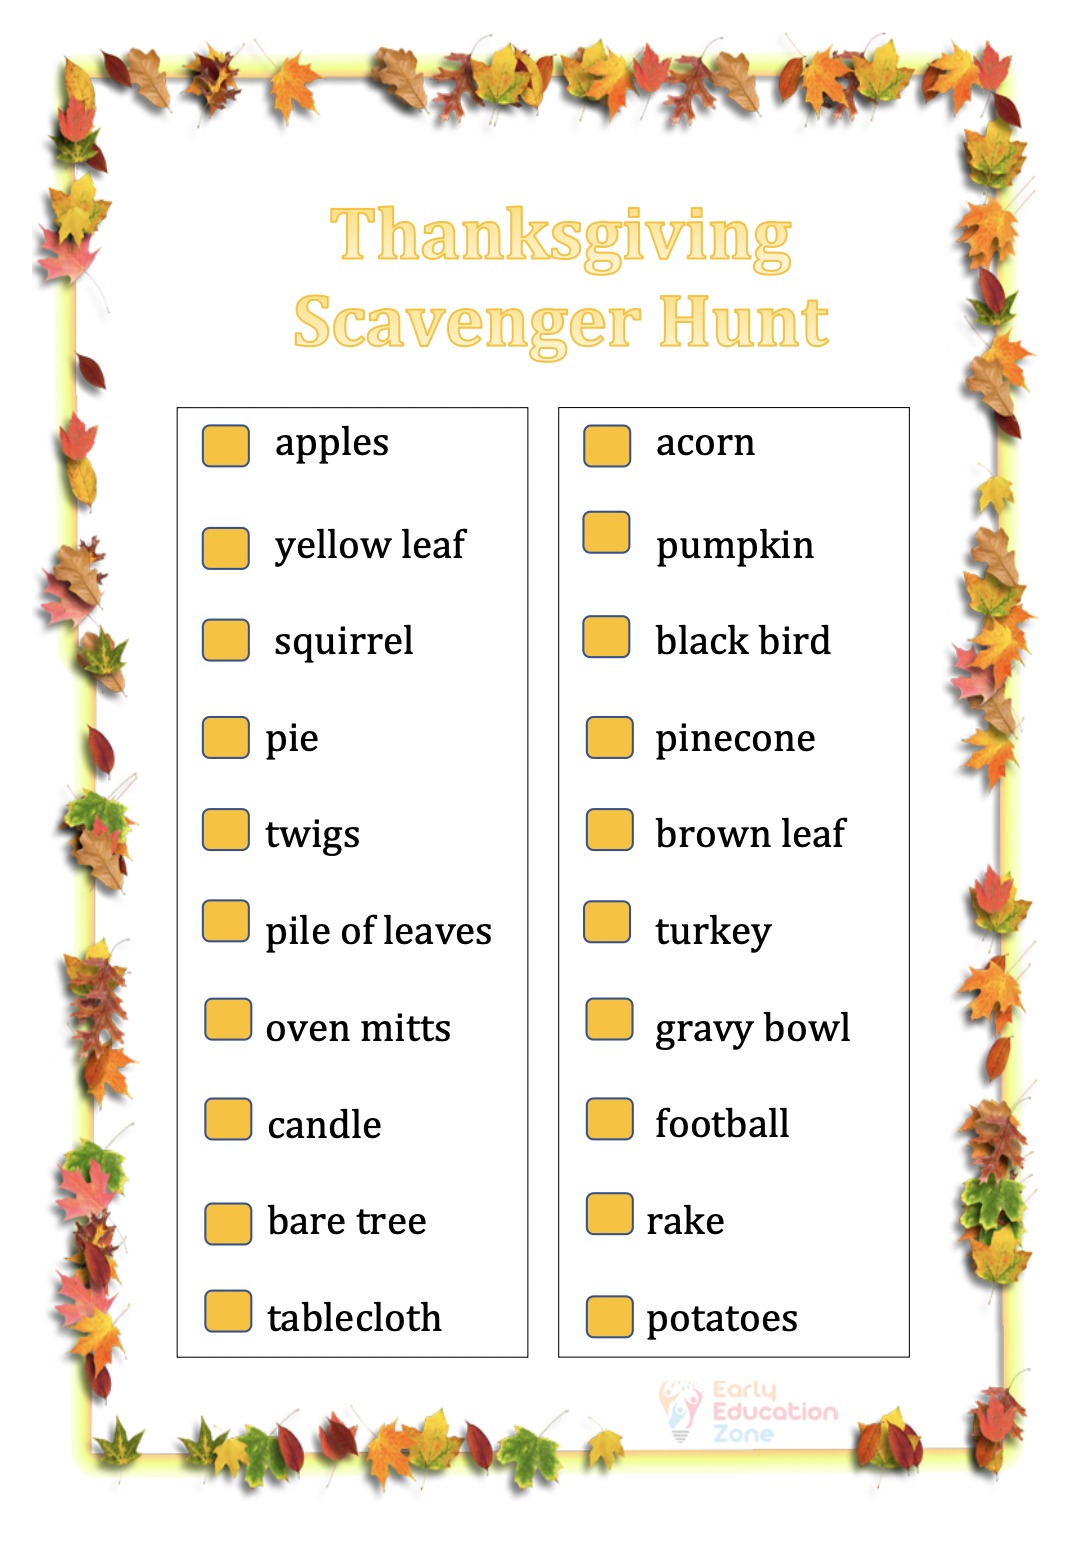 Thanksgiving scavenger hunt family activity